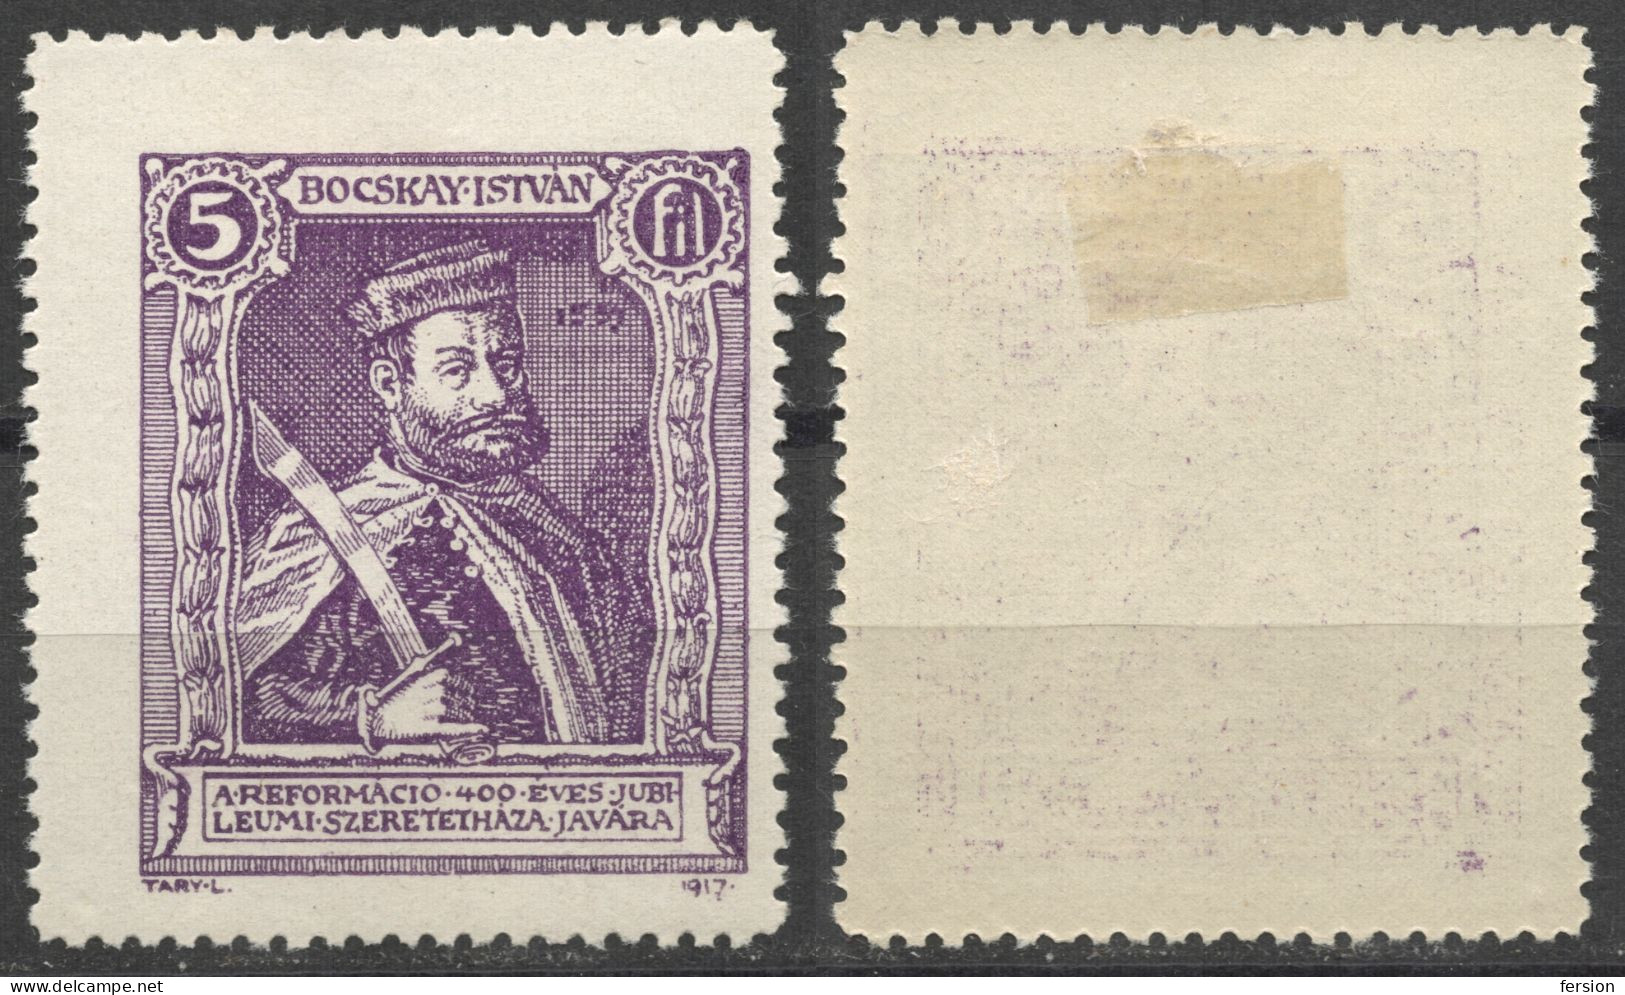 Bocskay Istvan Prince Transylvania ROMANIA Reformed Church Protestant Reformation Label Vignette Cinderella 1917 HUNGARY - Transsylvanië